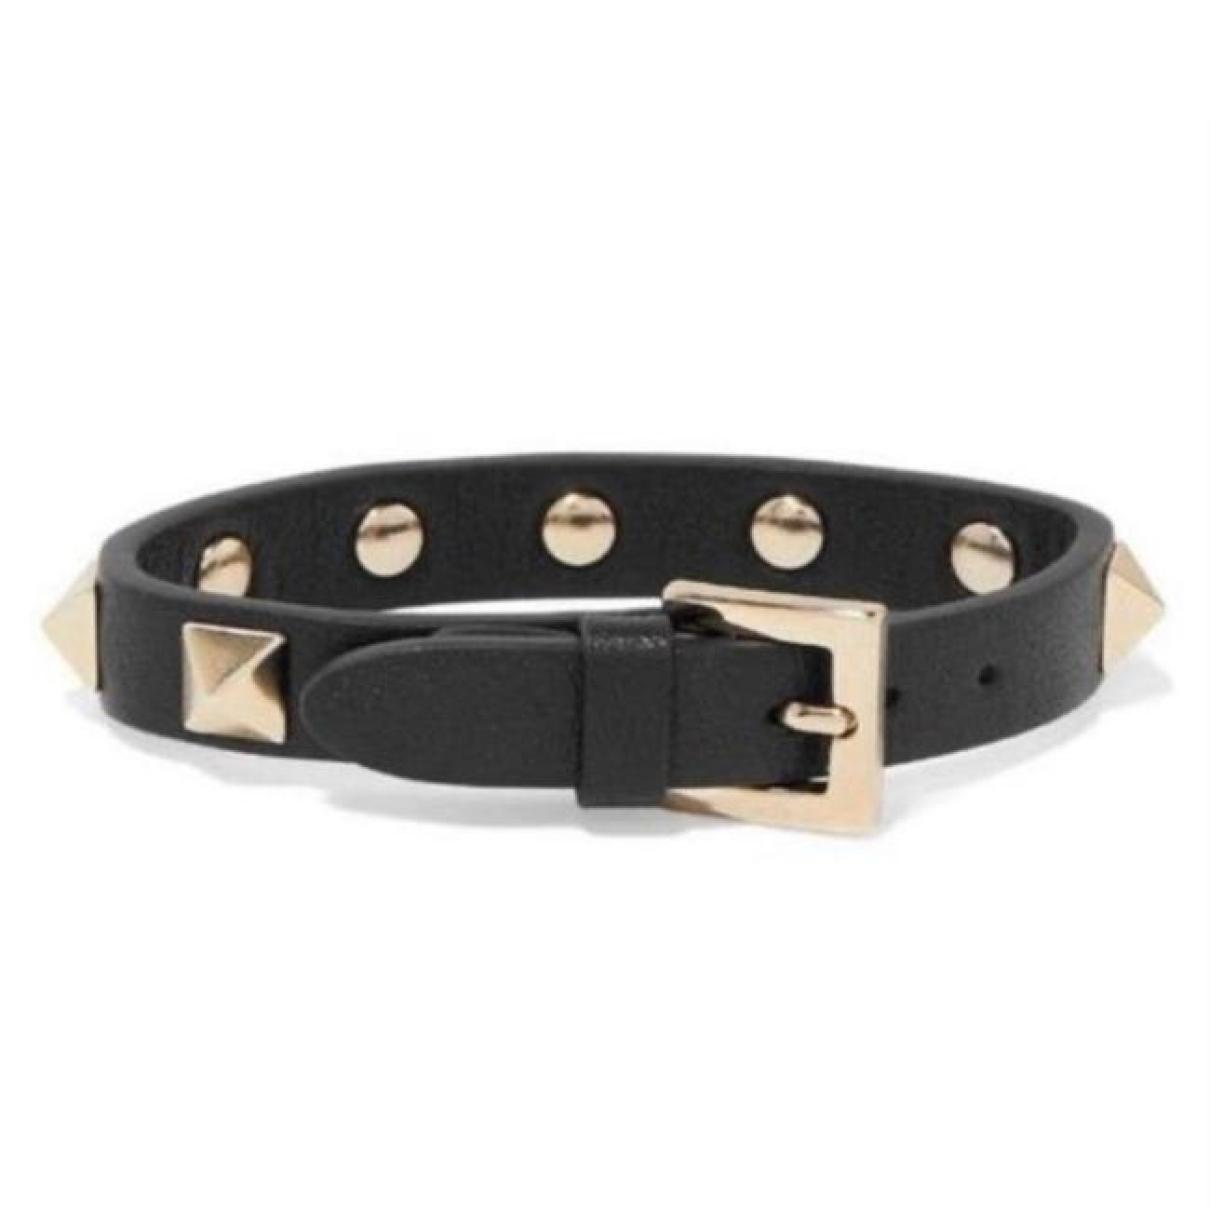 Leather bracelet - 2